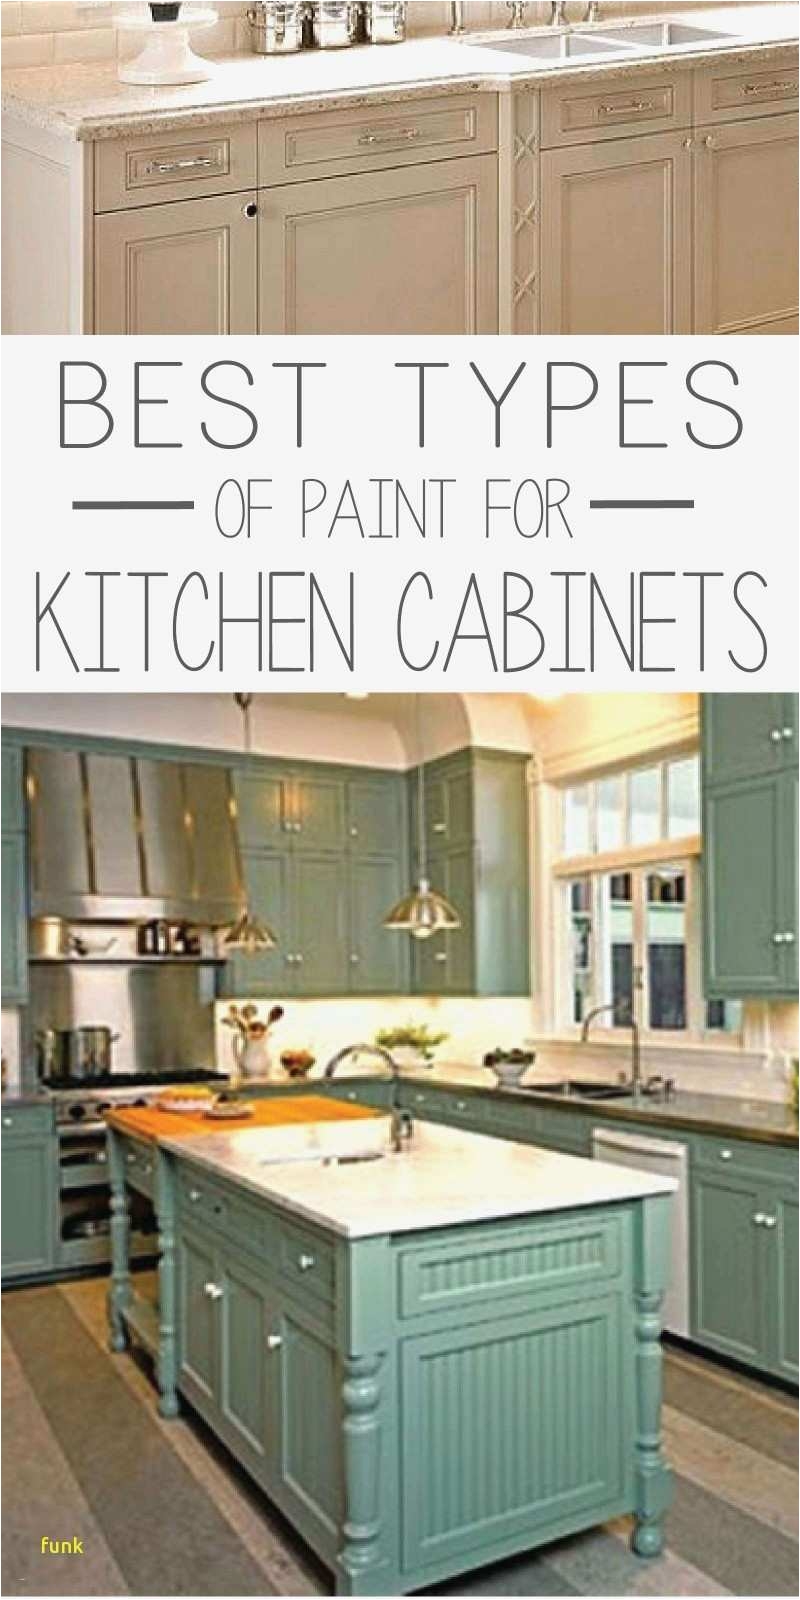 Dream Maker Kitchens and Baths Inspirational Small Kitchenette Ideas Best Kitchen Ideas Bathroom Elegant Ideas 0d